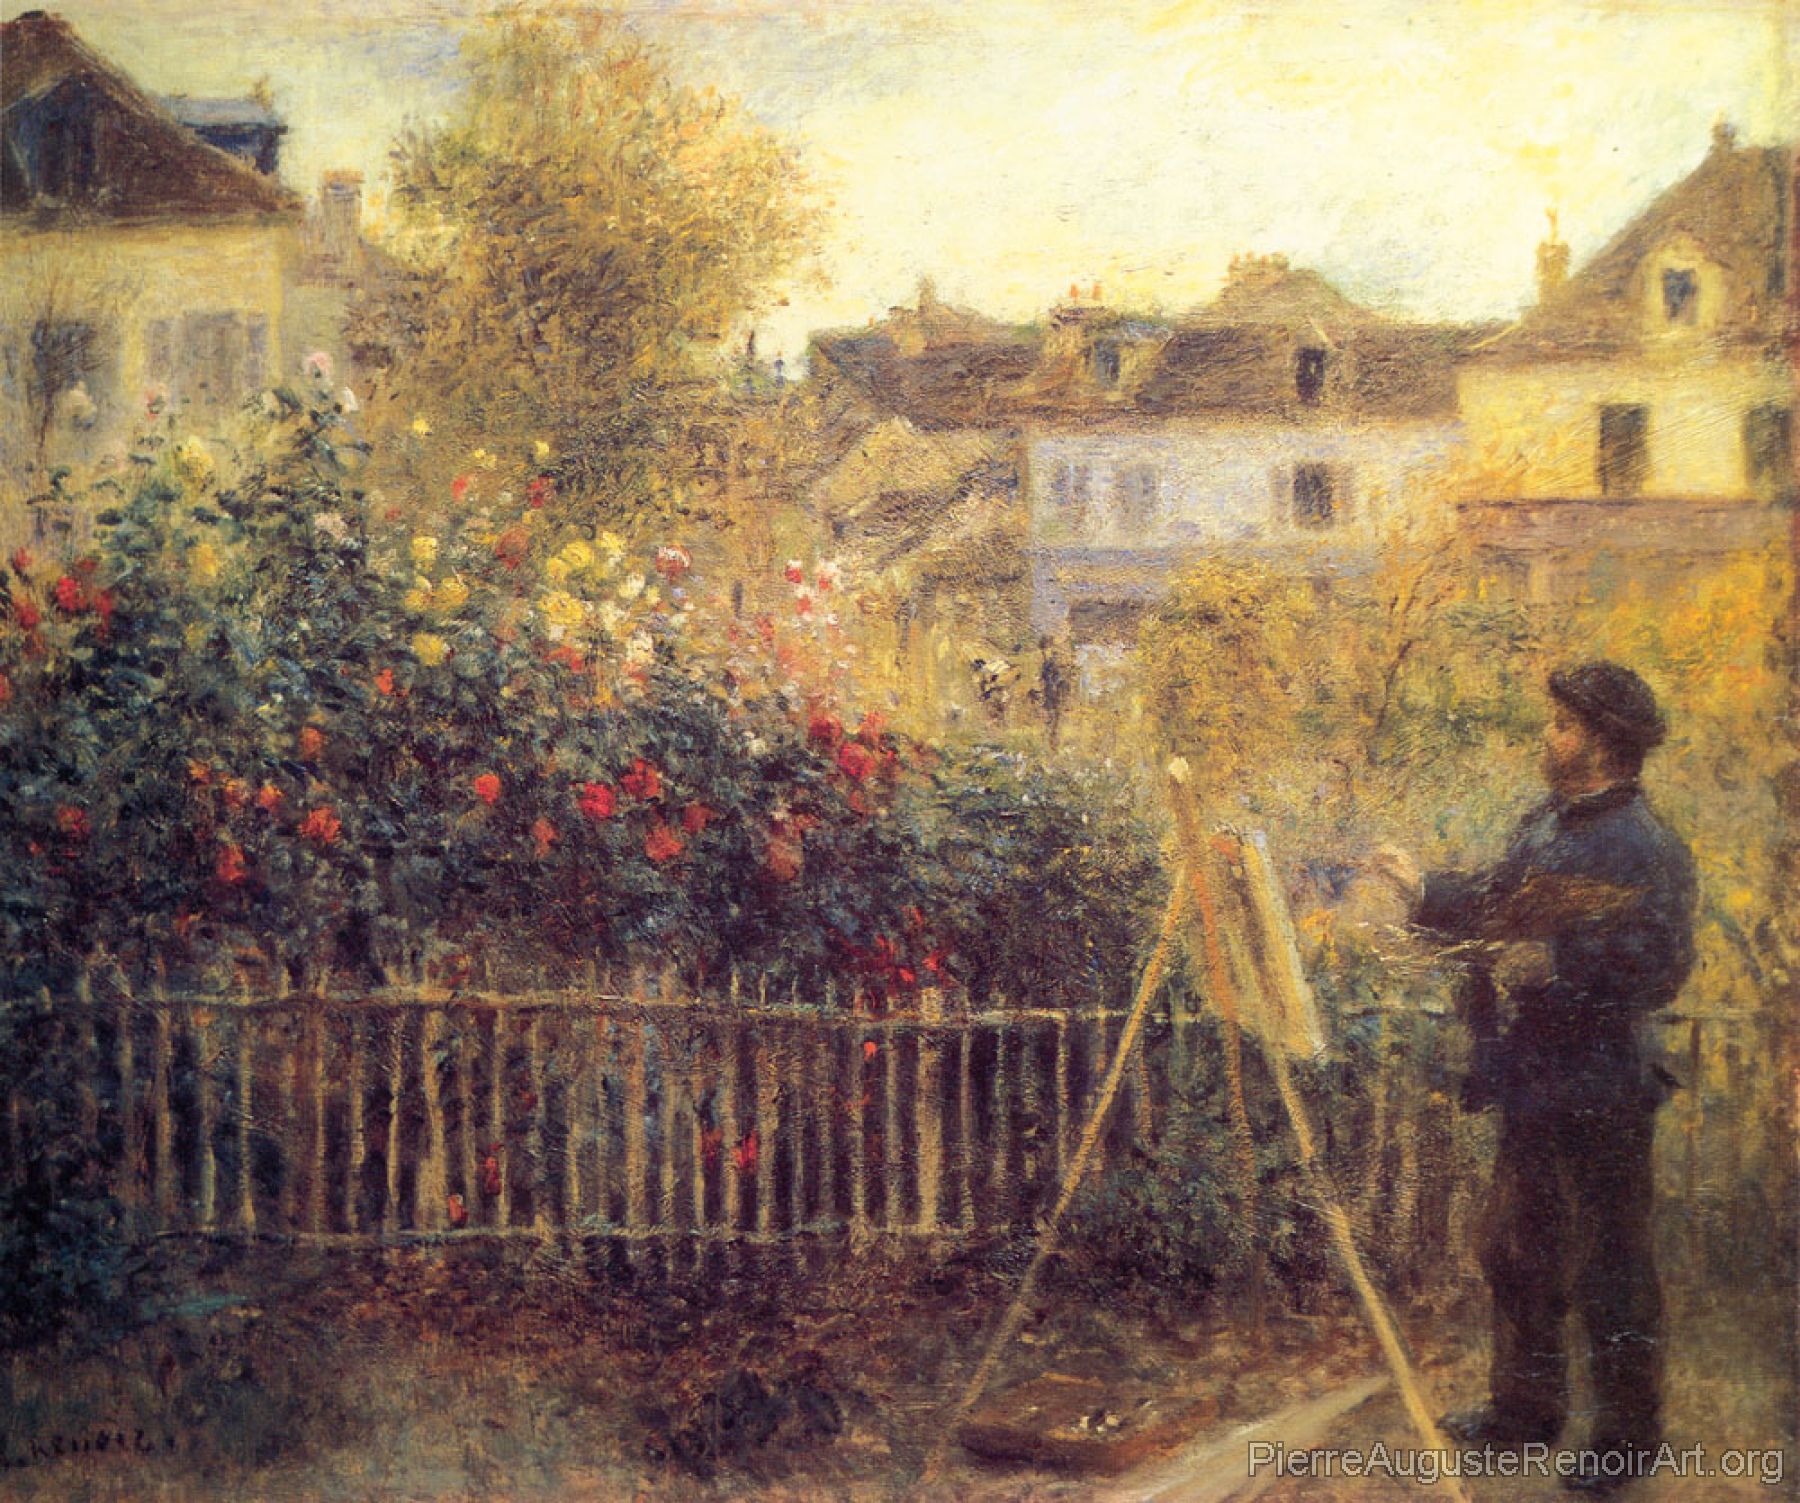 Claude Monet Painting in his Garden at Argenteuil